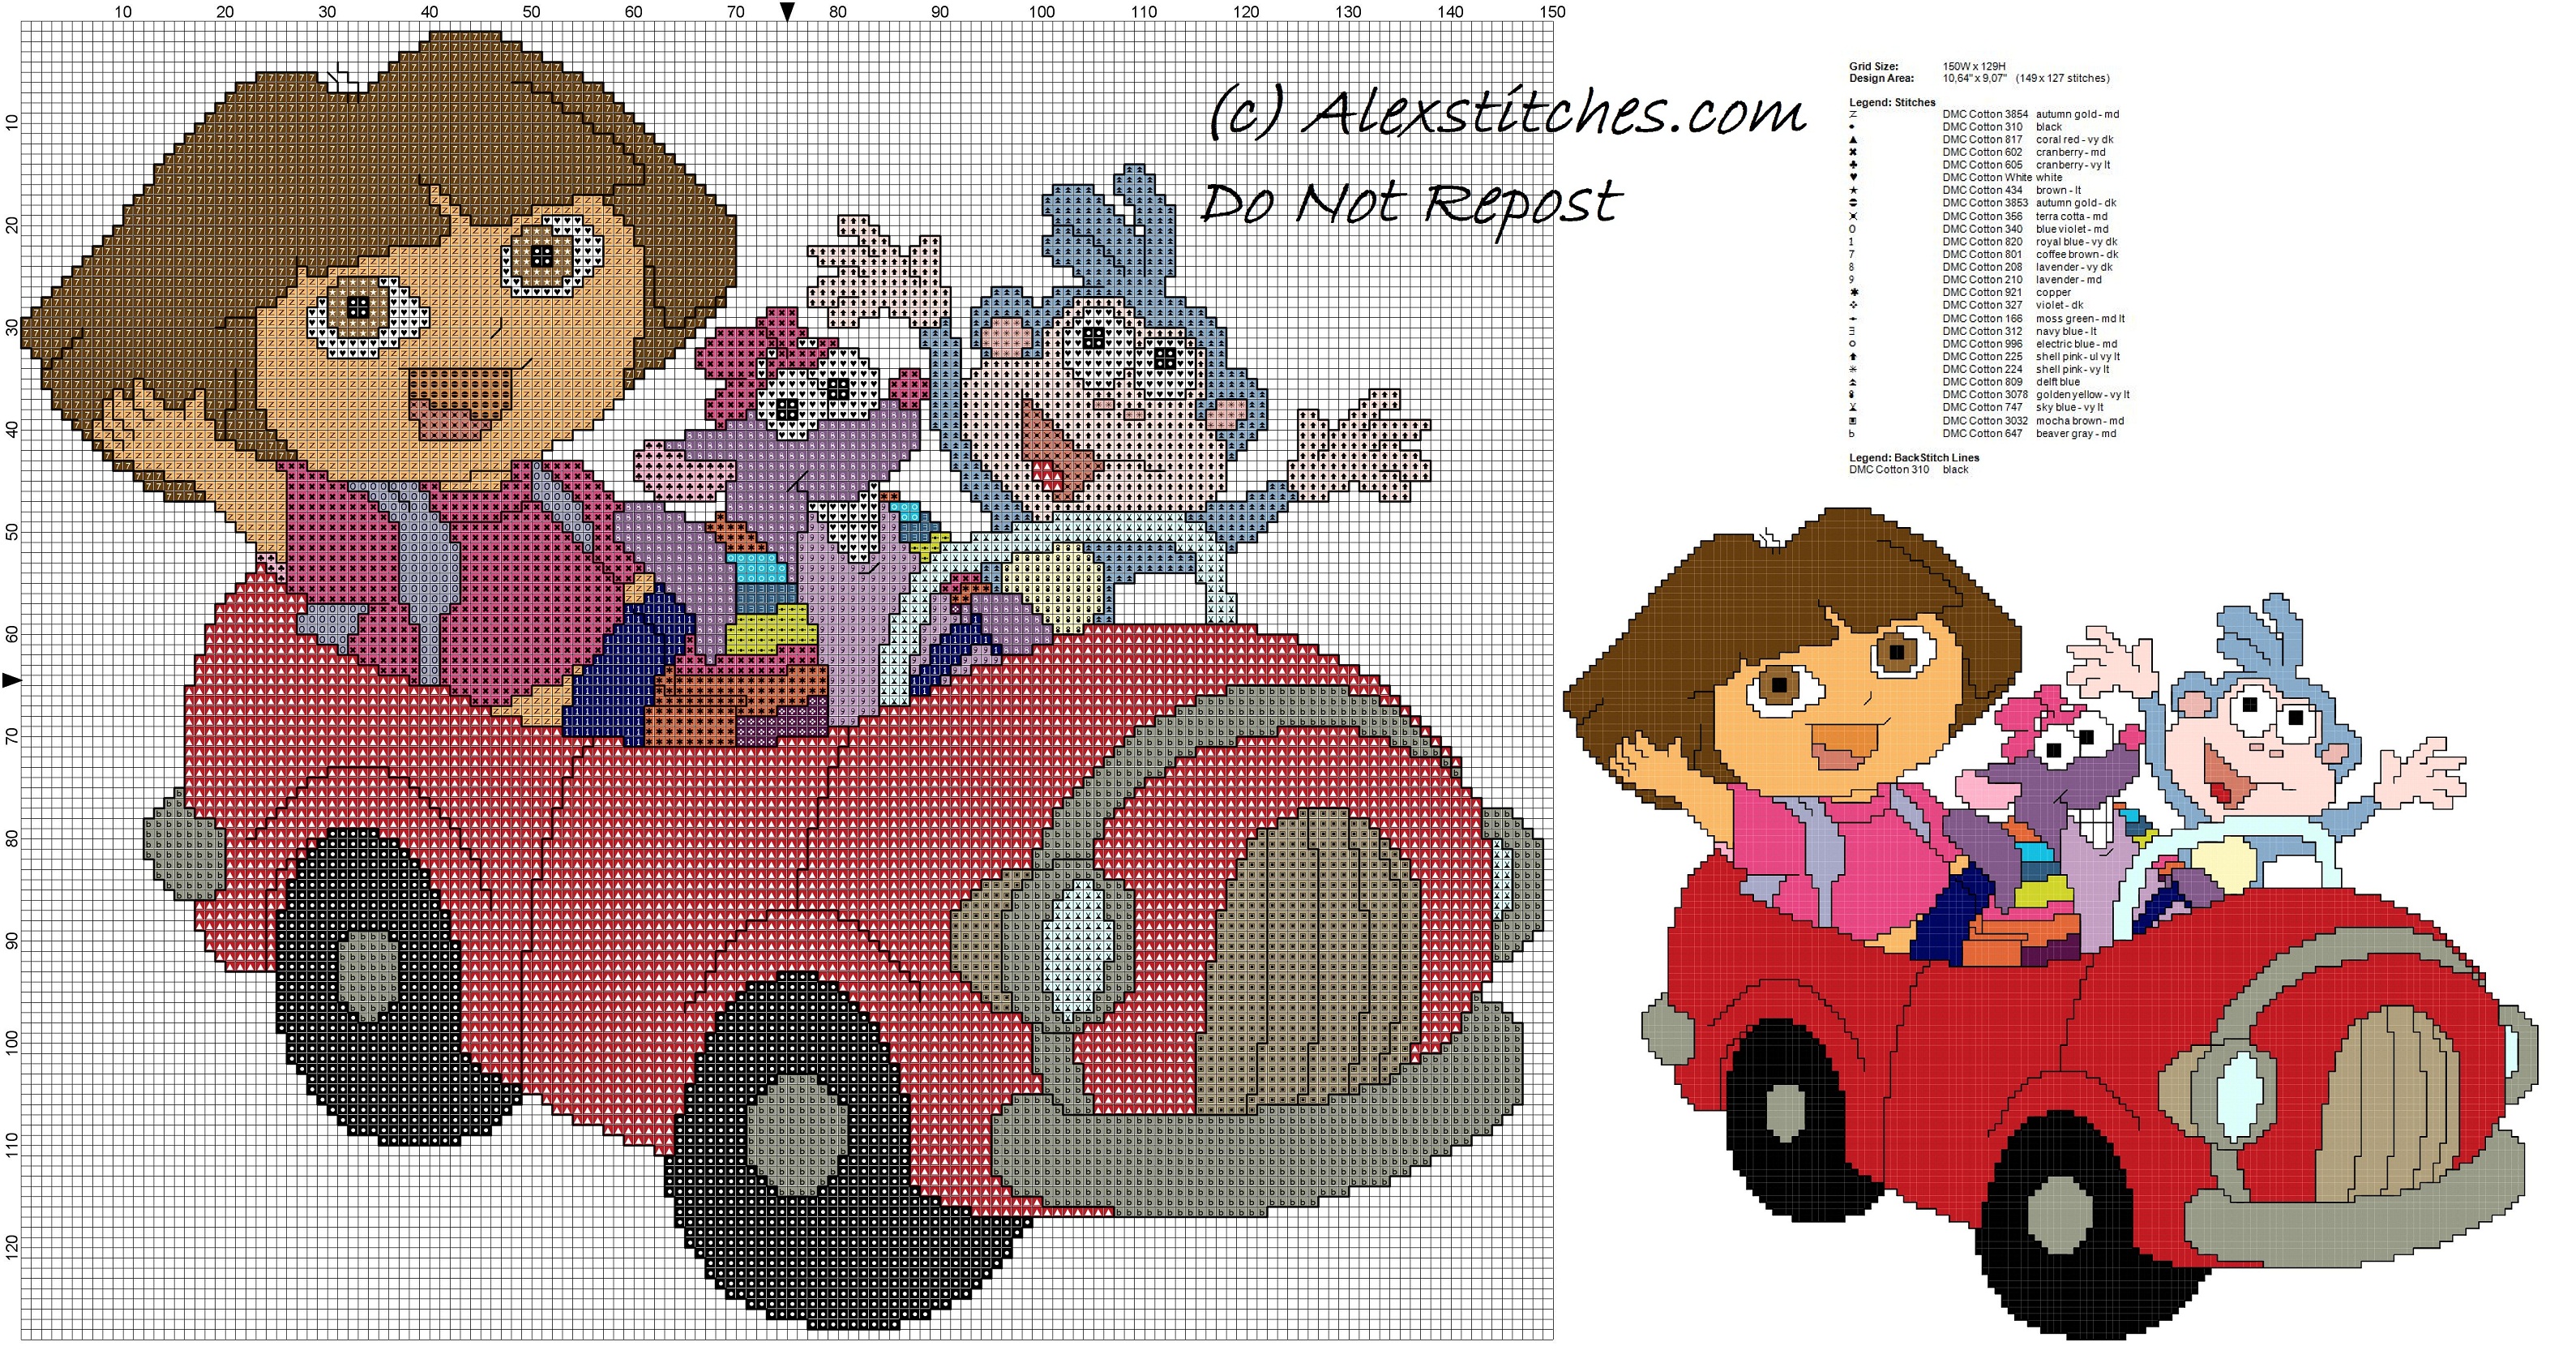 Dora the Explorer children free cross stitch pattern